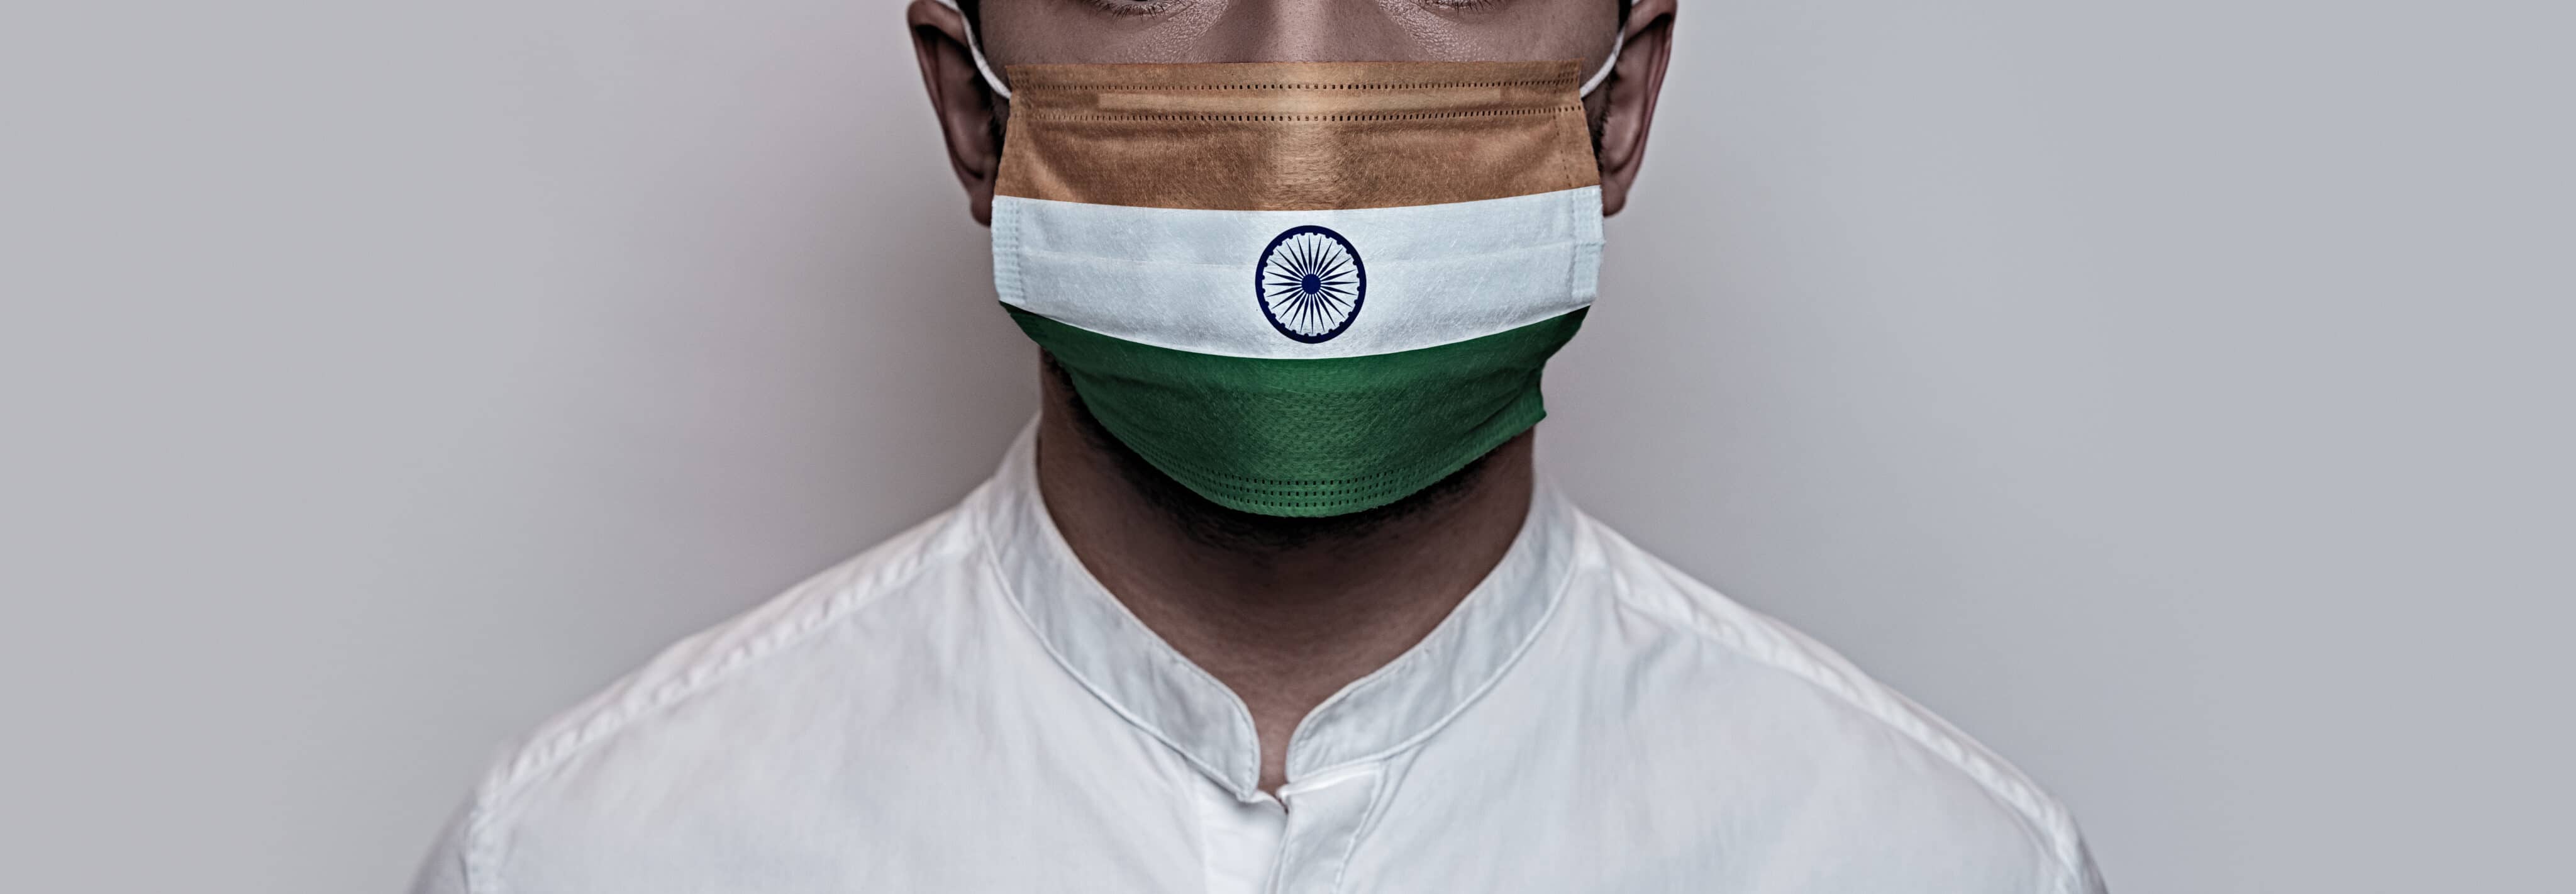 Indiano usando máscara